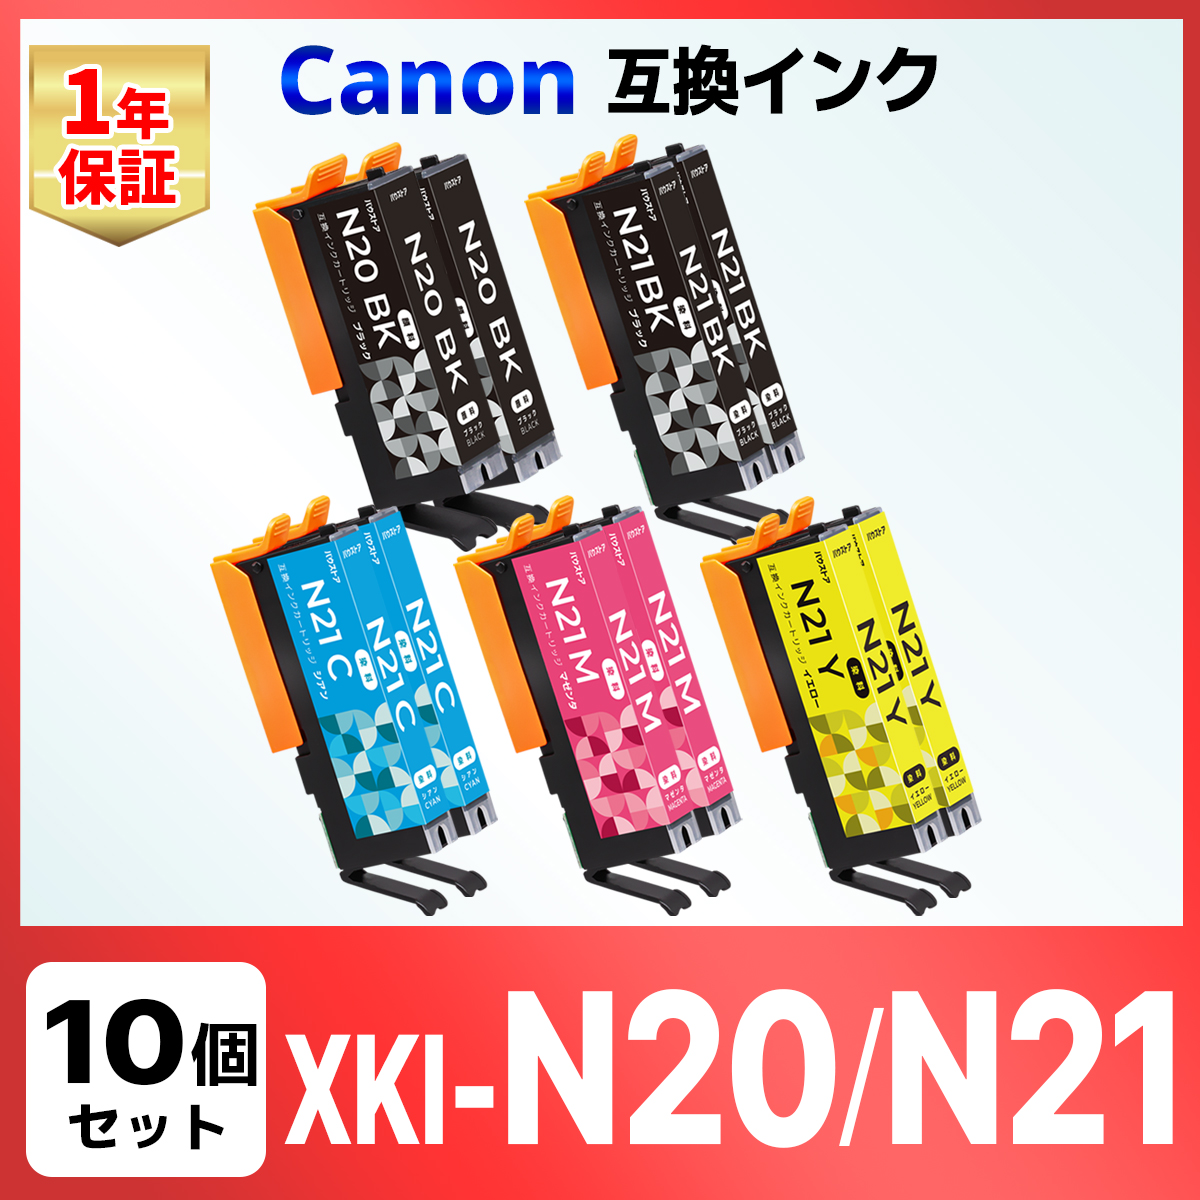 XKI-N21+N20/5MP XKI-N20 XKI-N21 互換インク XK110 XK100 XK500 XK120 Canon キャノン 10個セット XKIN20 XKIN21 XKI N20 XKI N21｜baustore